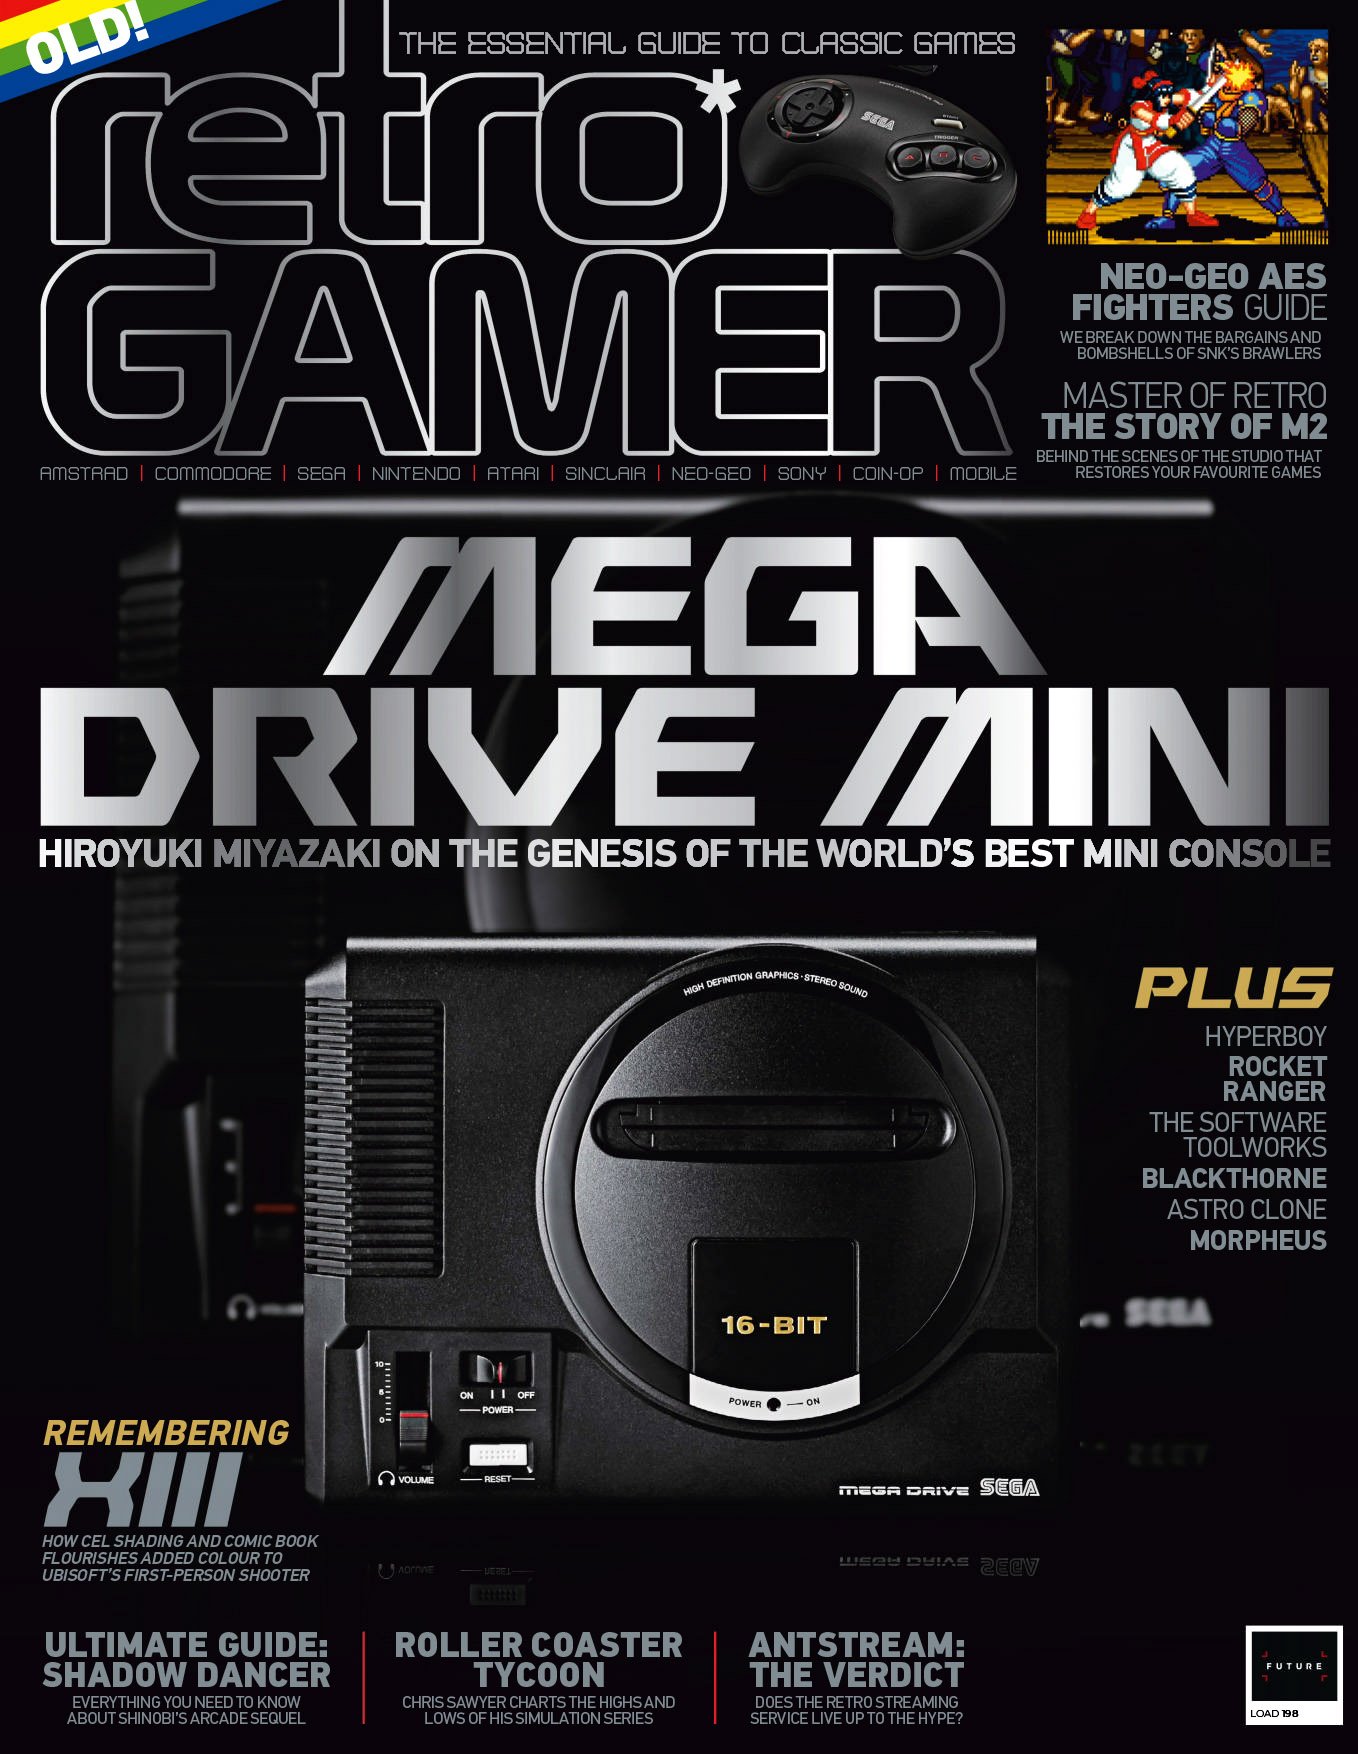 Retro Gamer Issue 198 (November 2019)